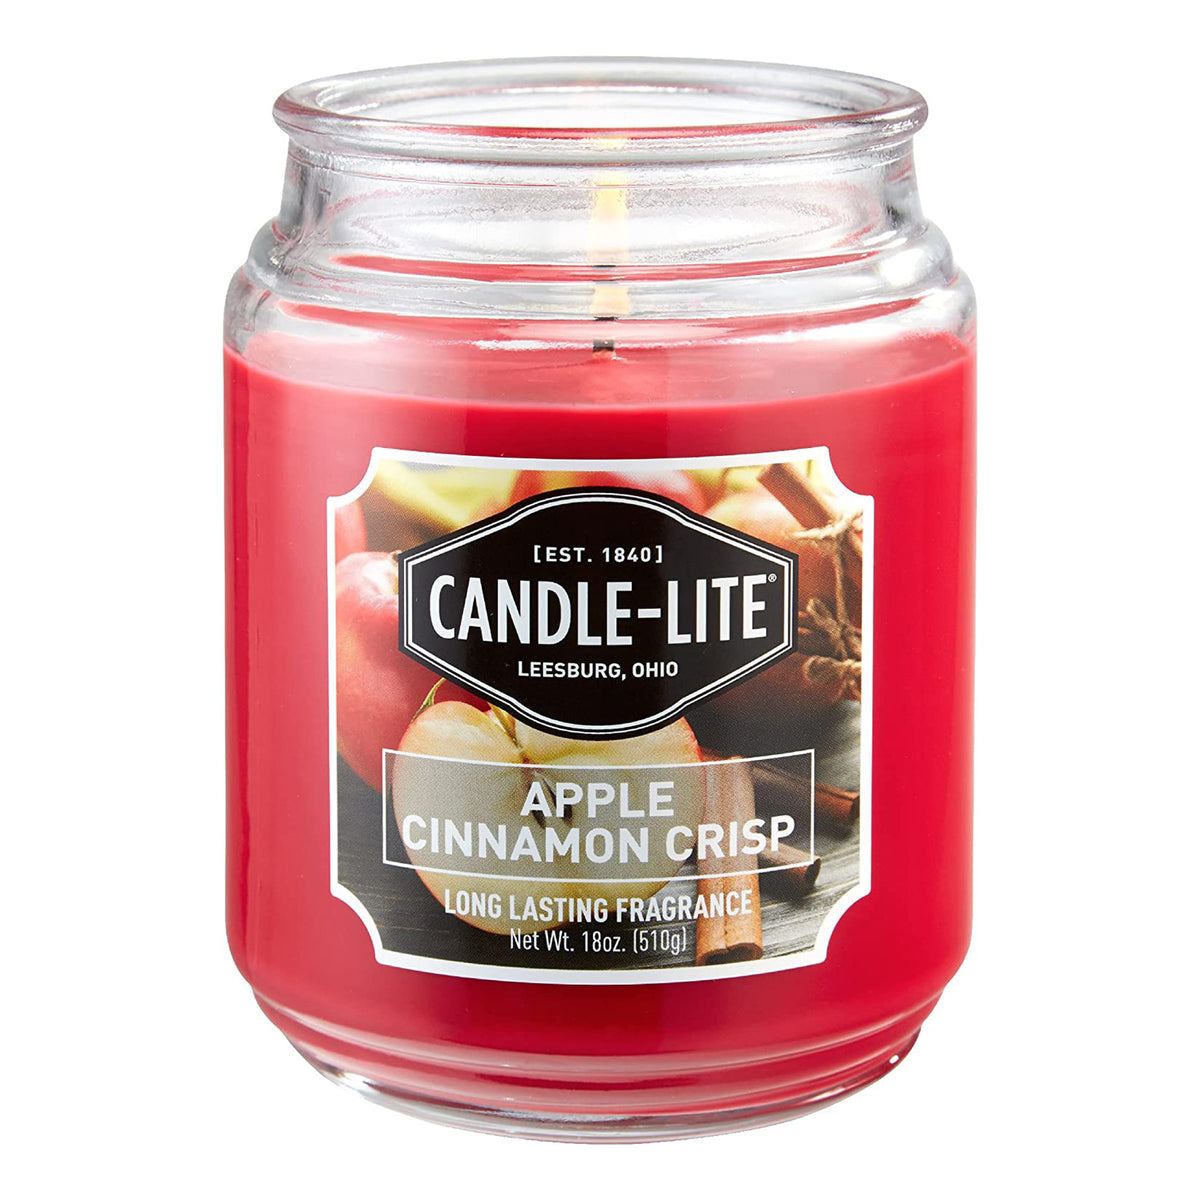 Candle with Fragrance - Apple Cinnamon Crisp